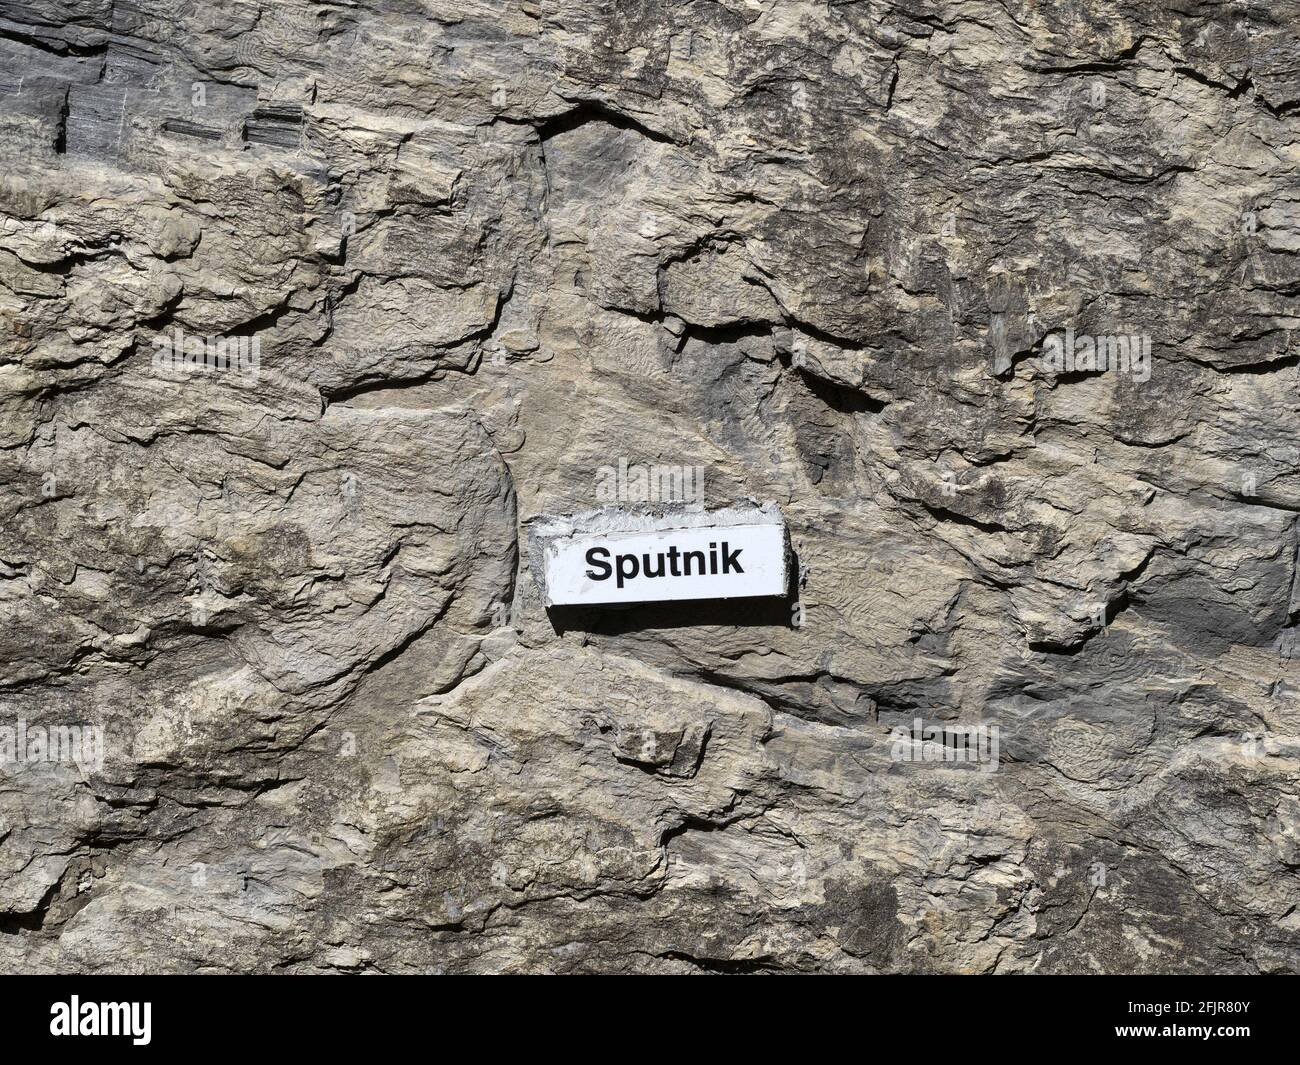 RECCO, ITALIEN - APRIL 26 2021 - Impfname auf Stein hinter der Kirche Sputnik Stockfoto